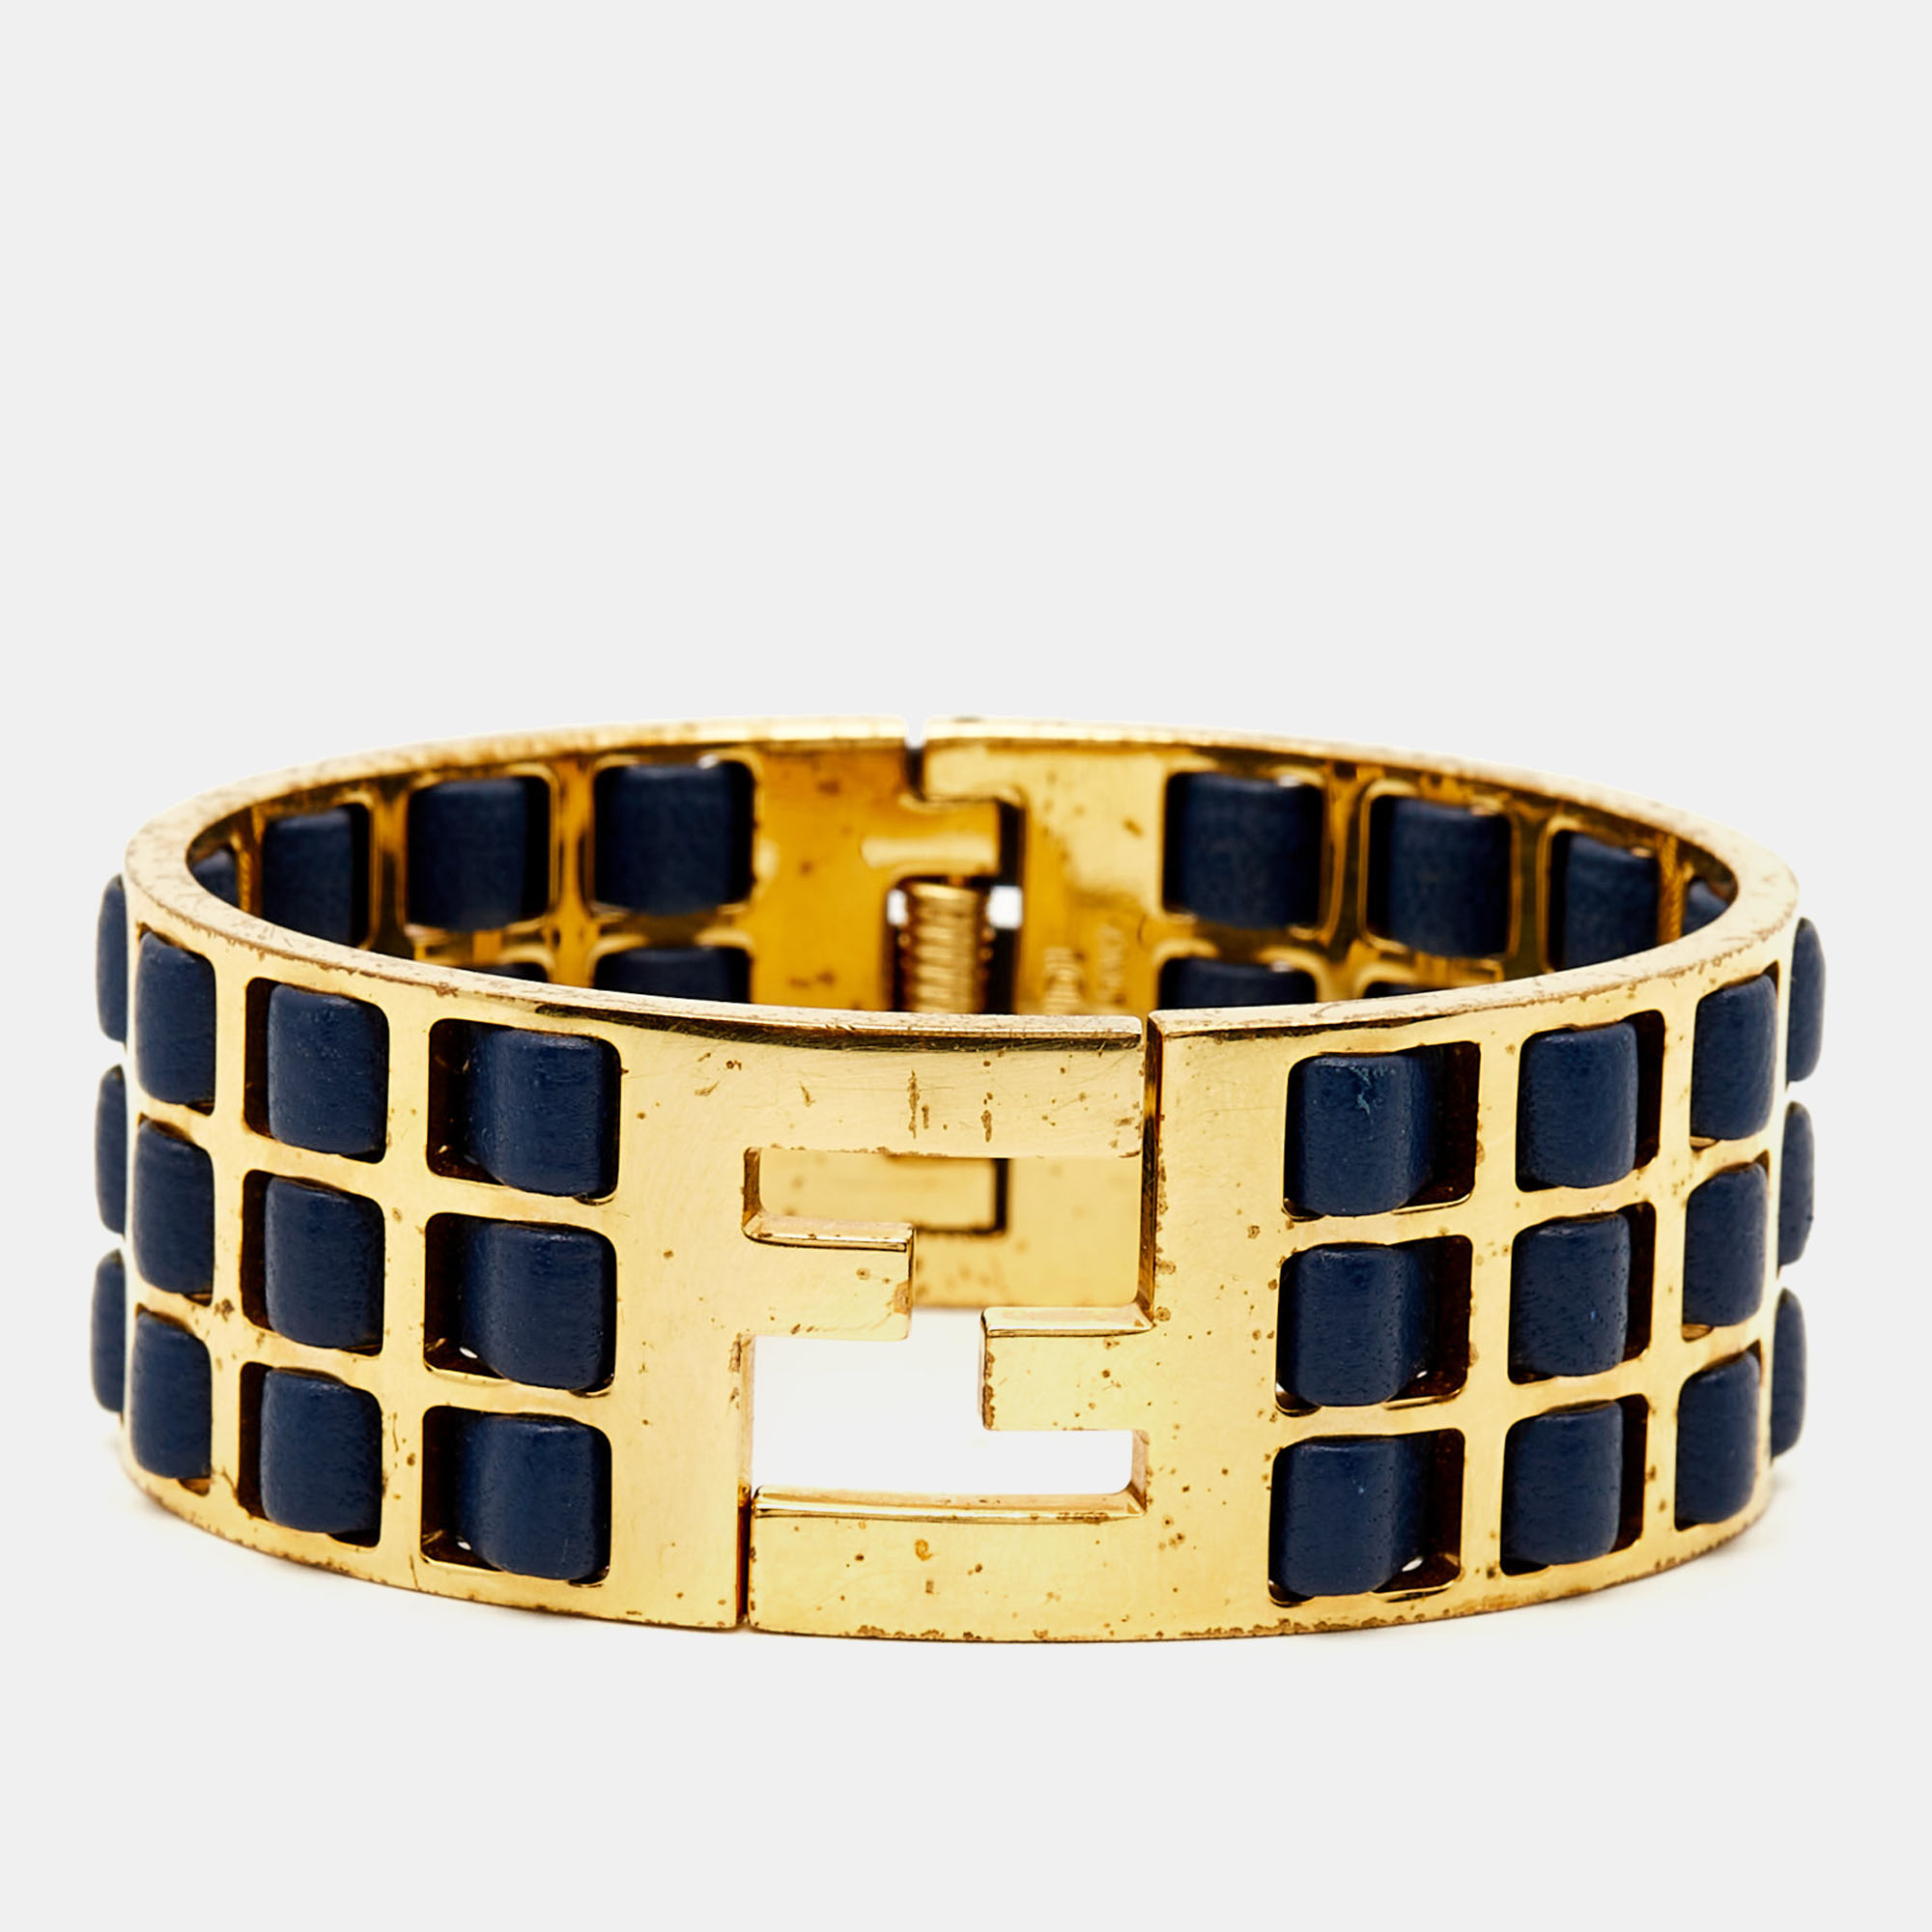 Fendi fendista leather gold tone bracelet m